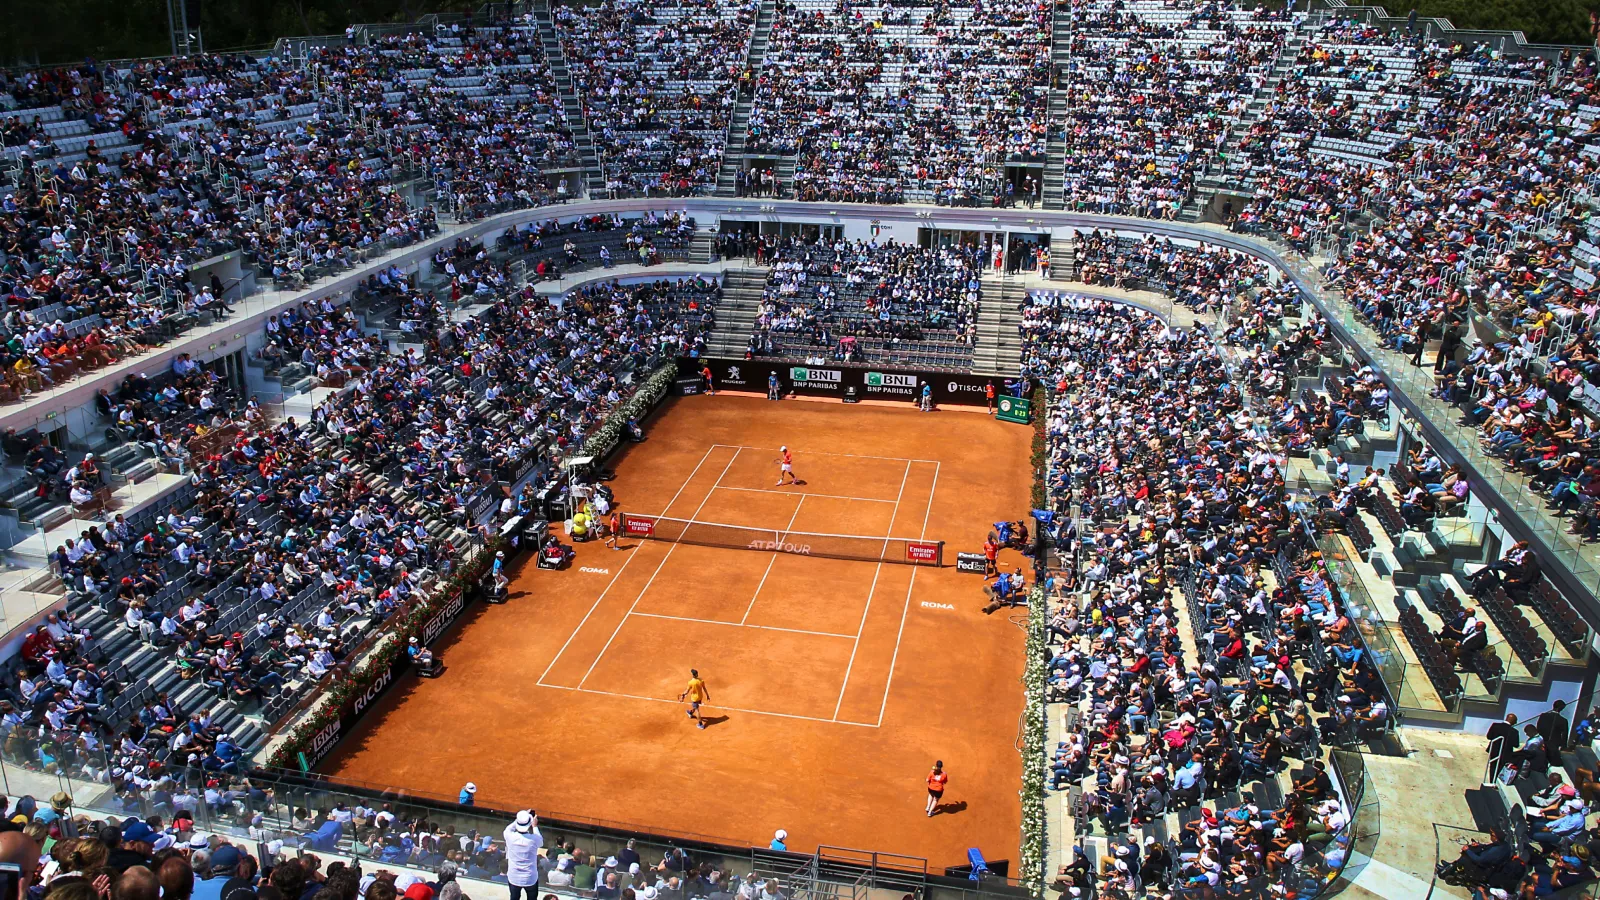 Internazionali Tennis di Roma, much more than a tournament